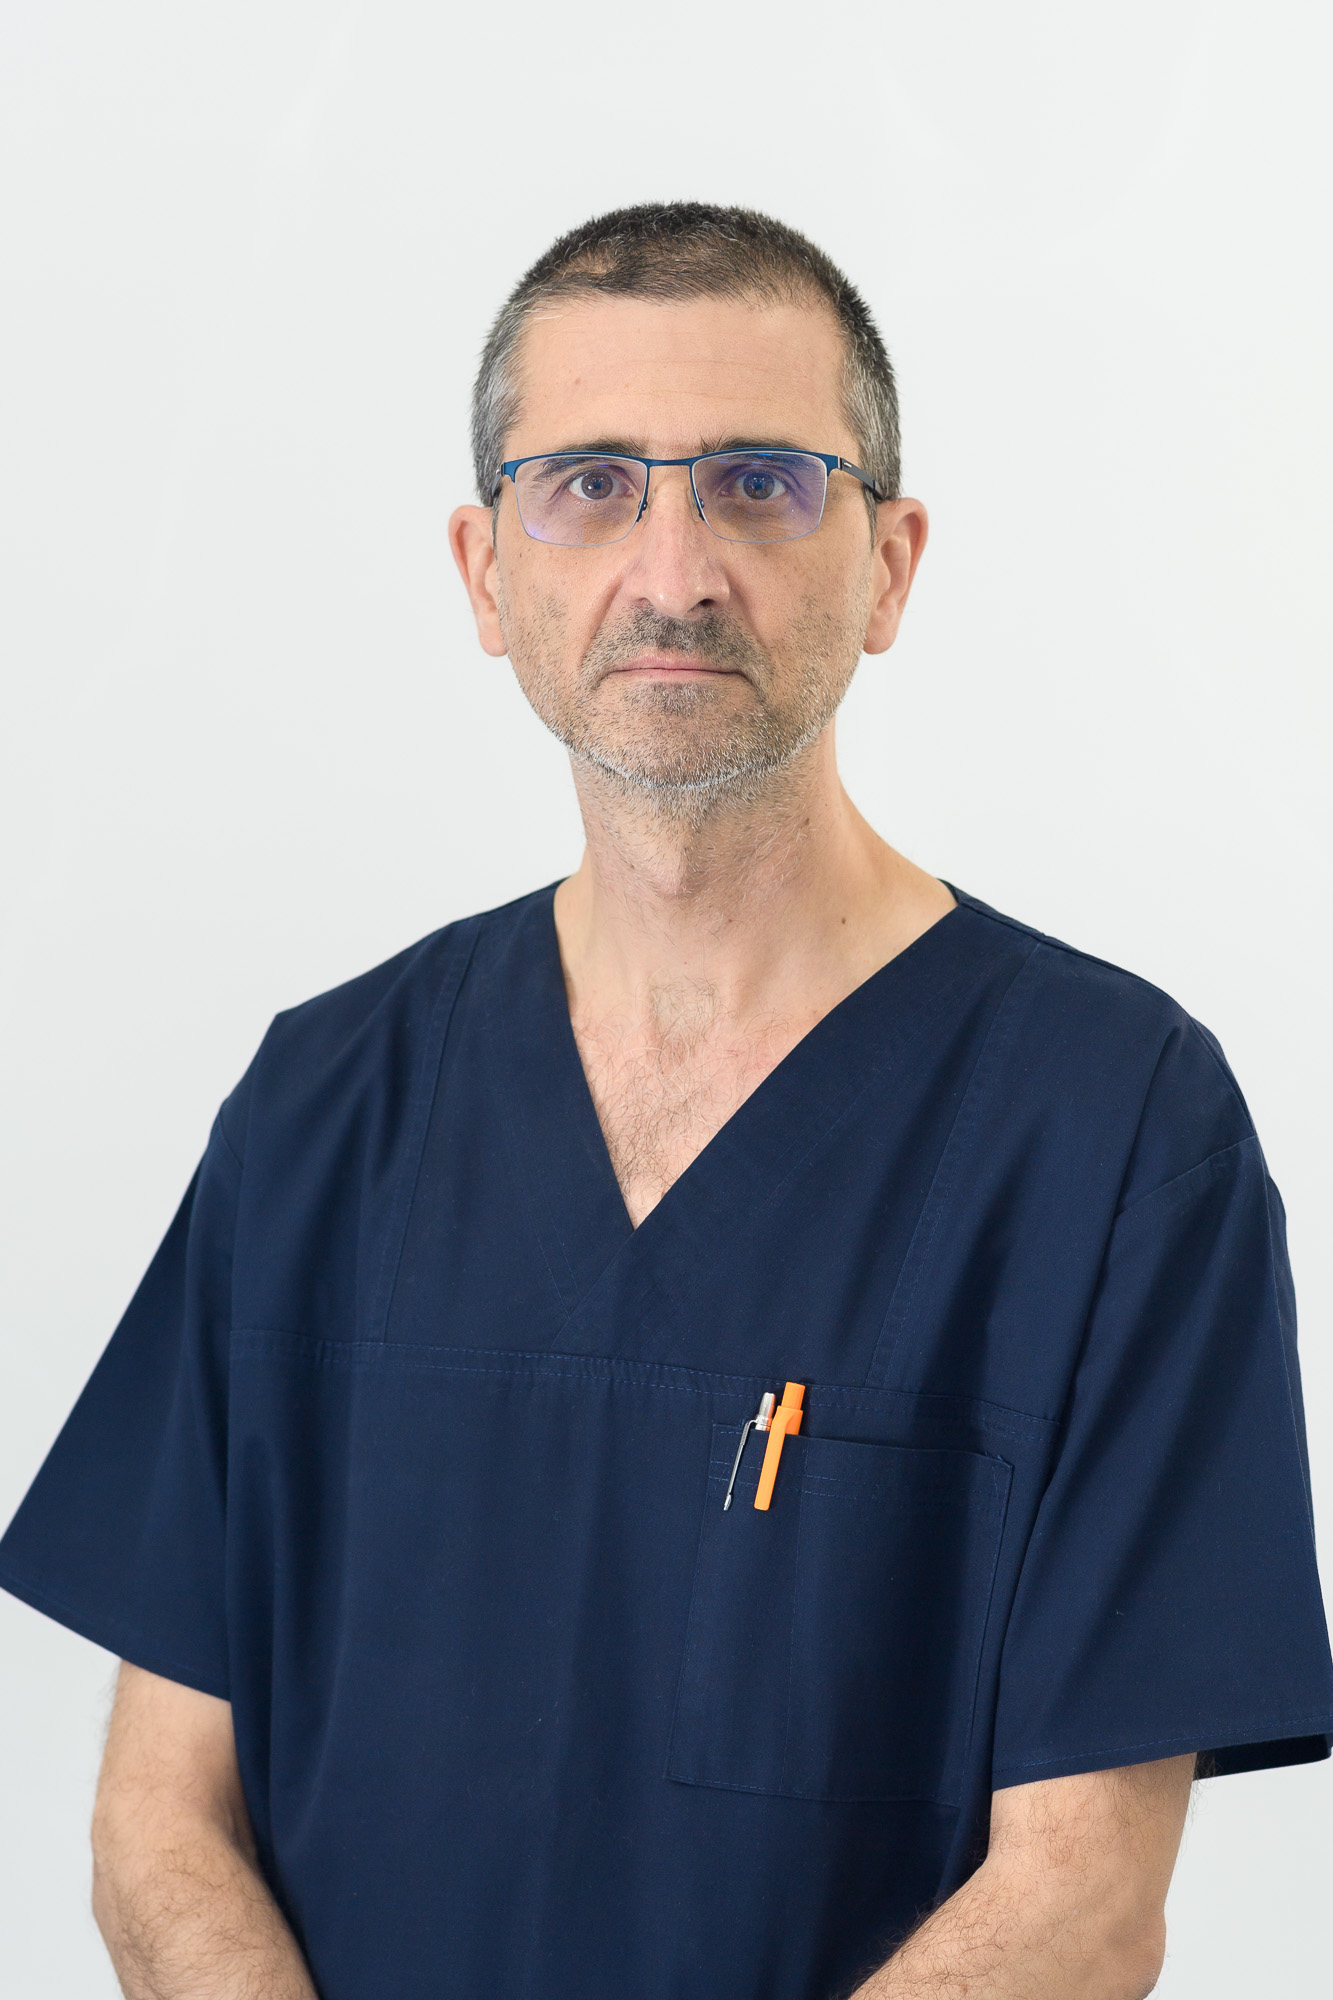 As. Univ. Dr.  Matei Serban Popa Cherecheanu